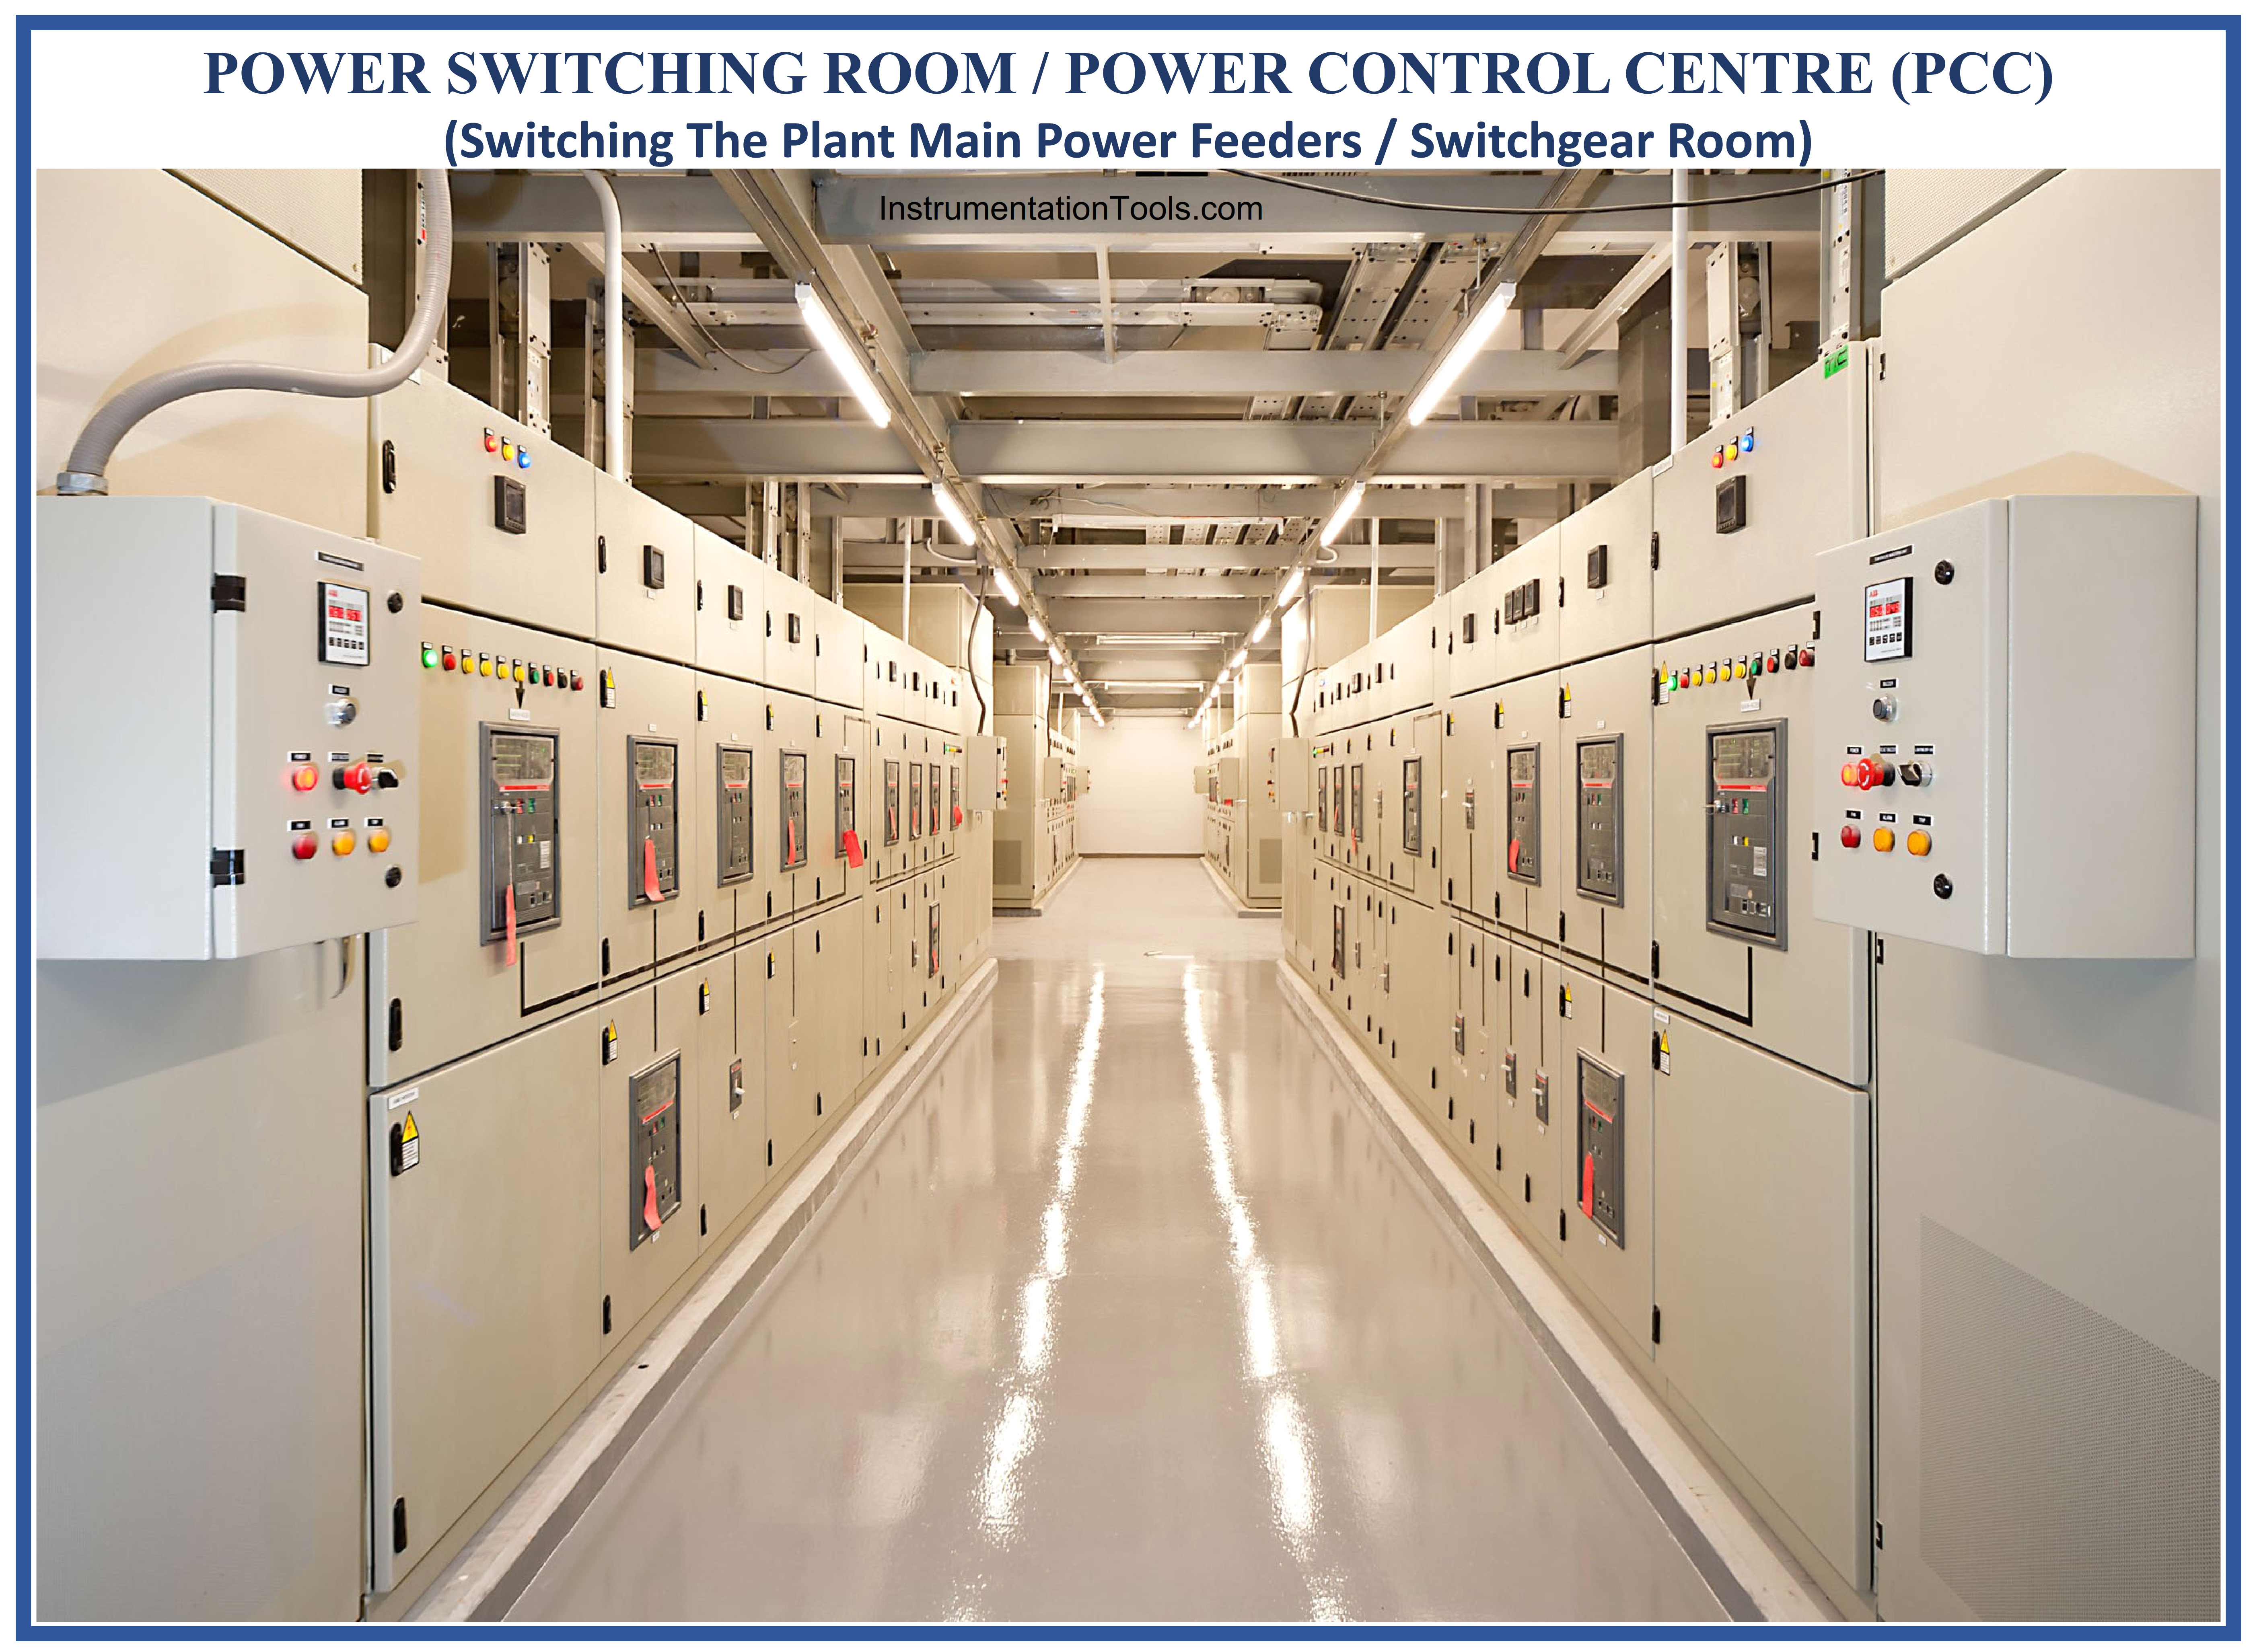 Power Control Center (PCC)